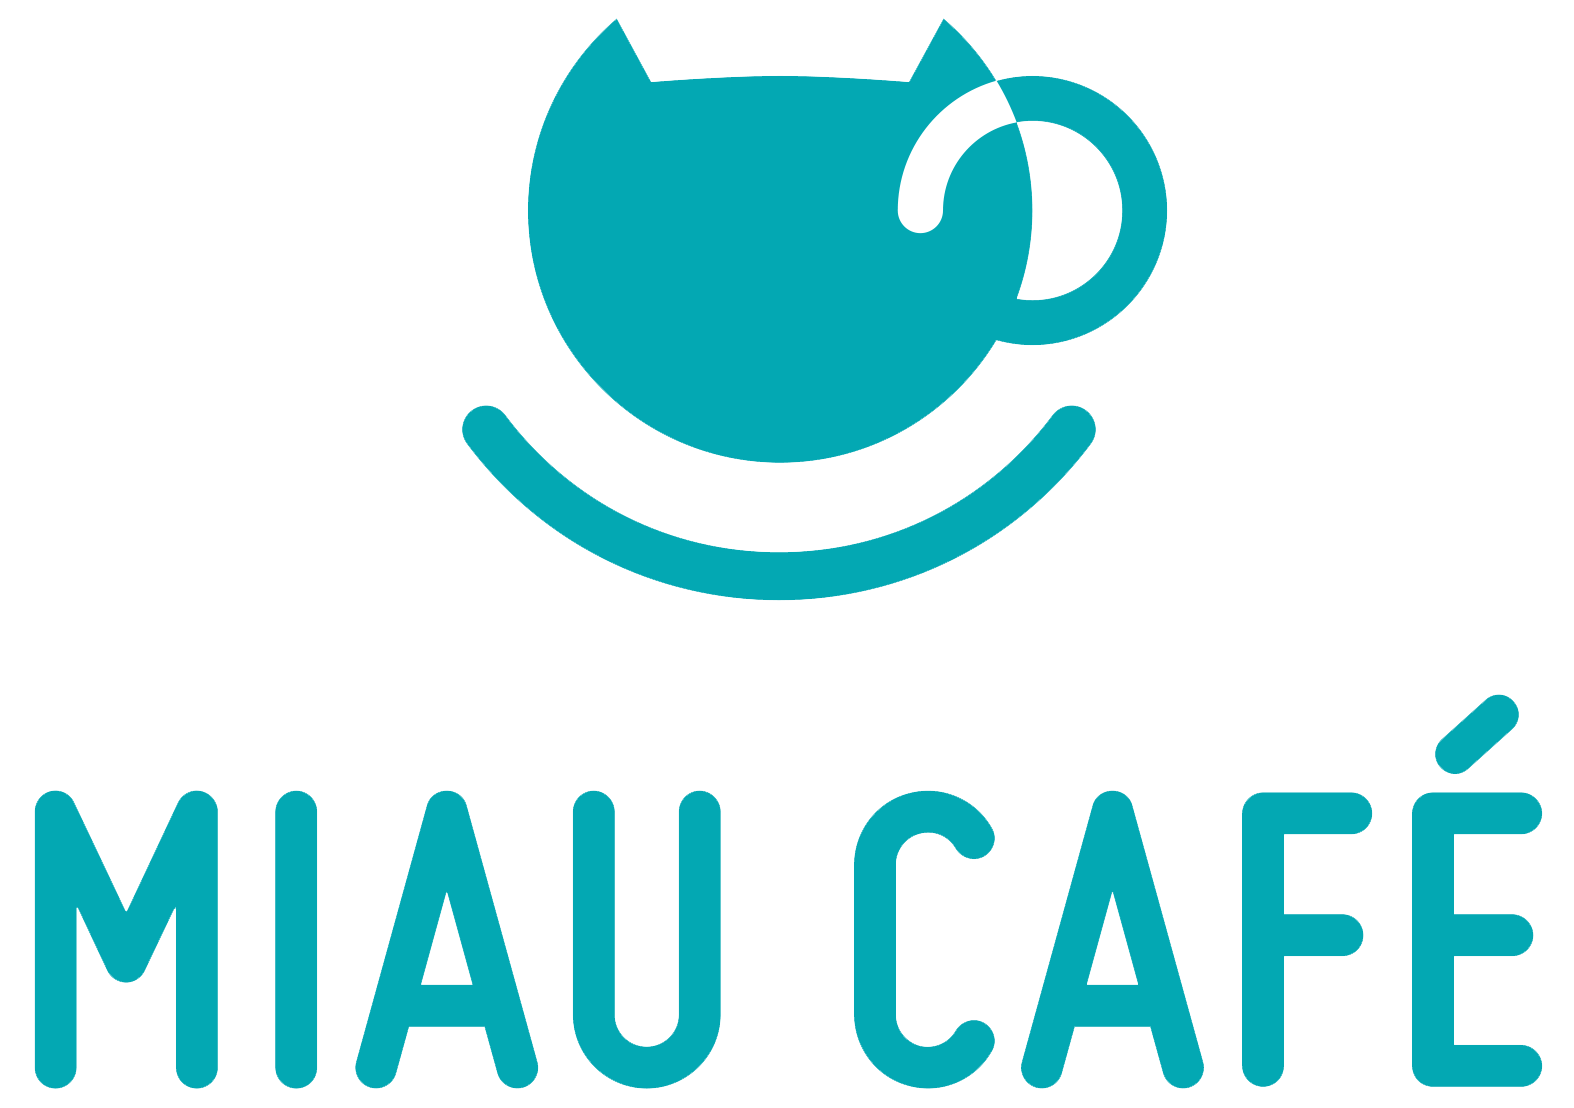 Miau Cafe